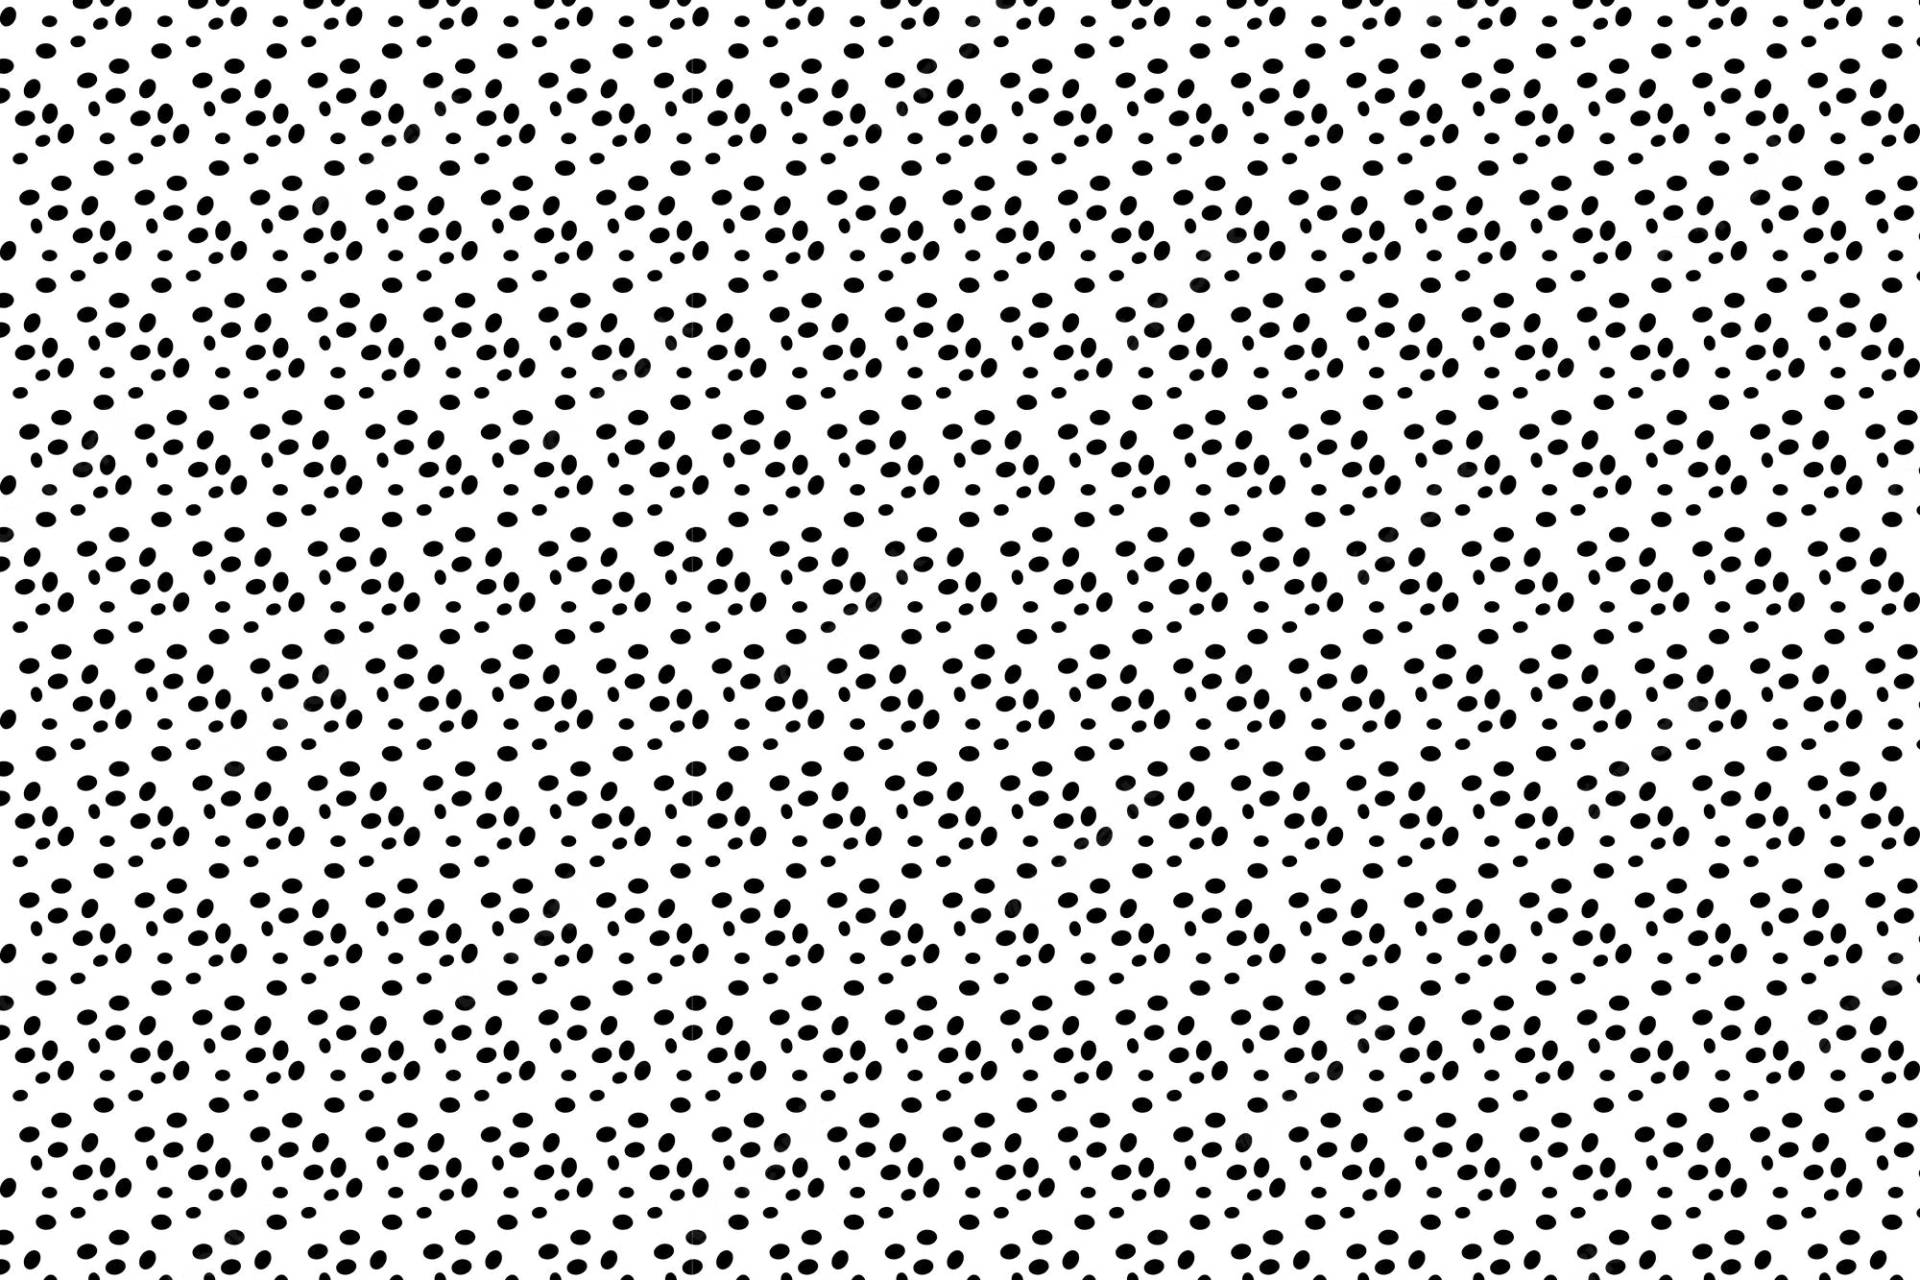 Irregular Specks Black Dot Iphone Background